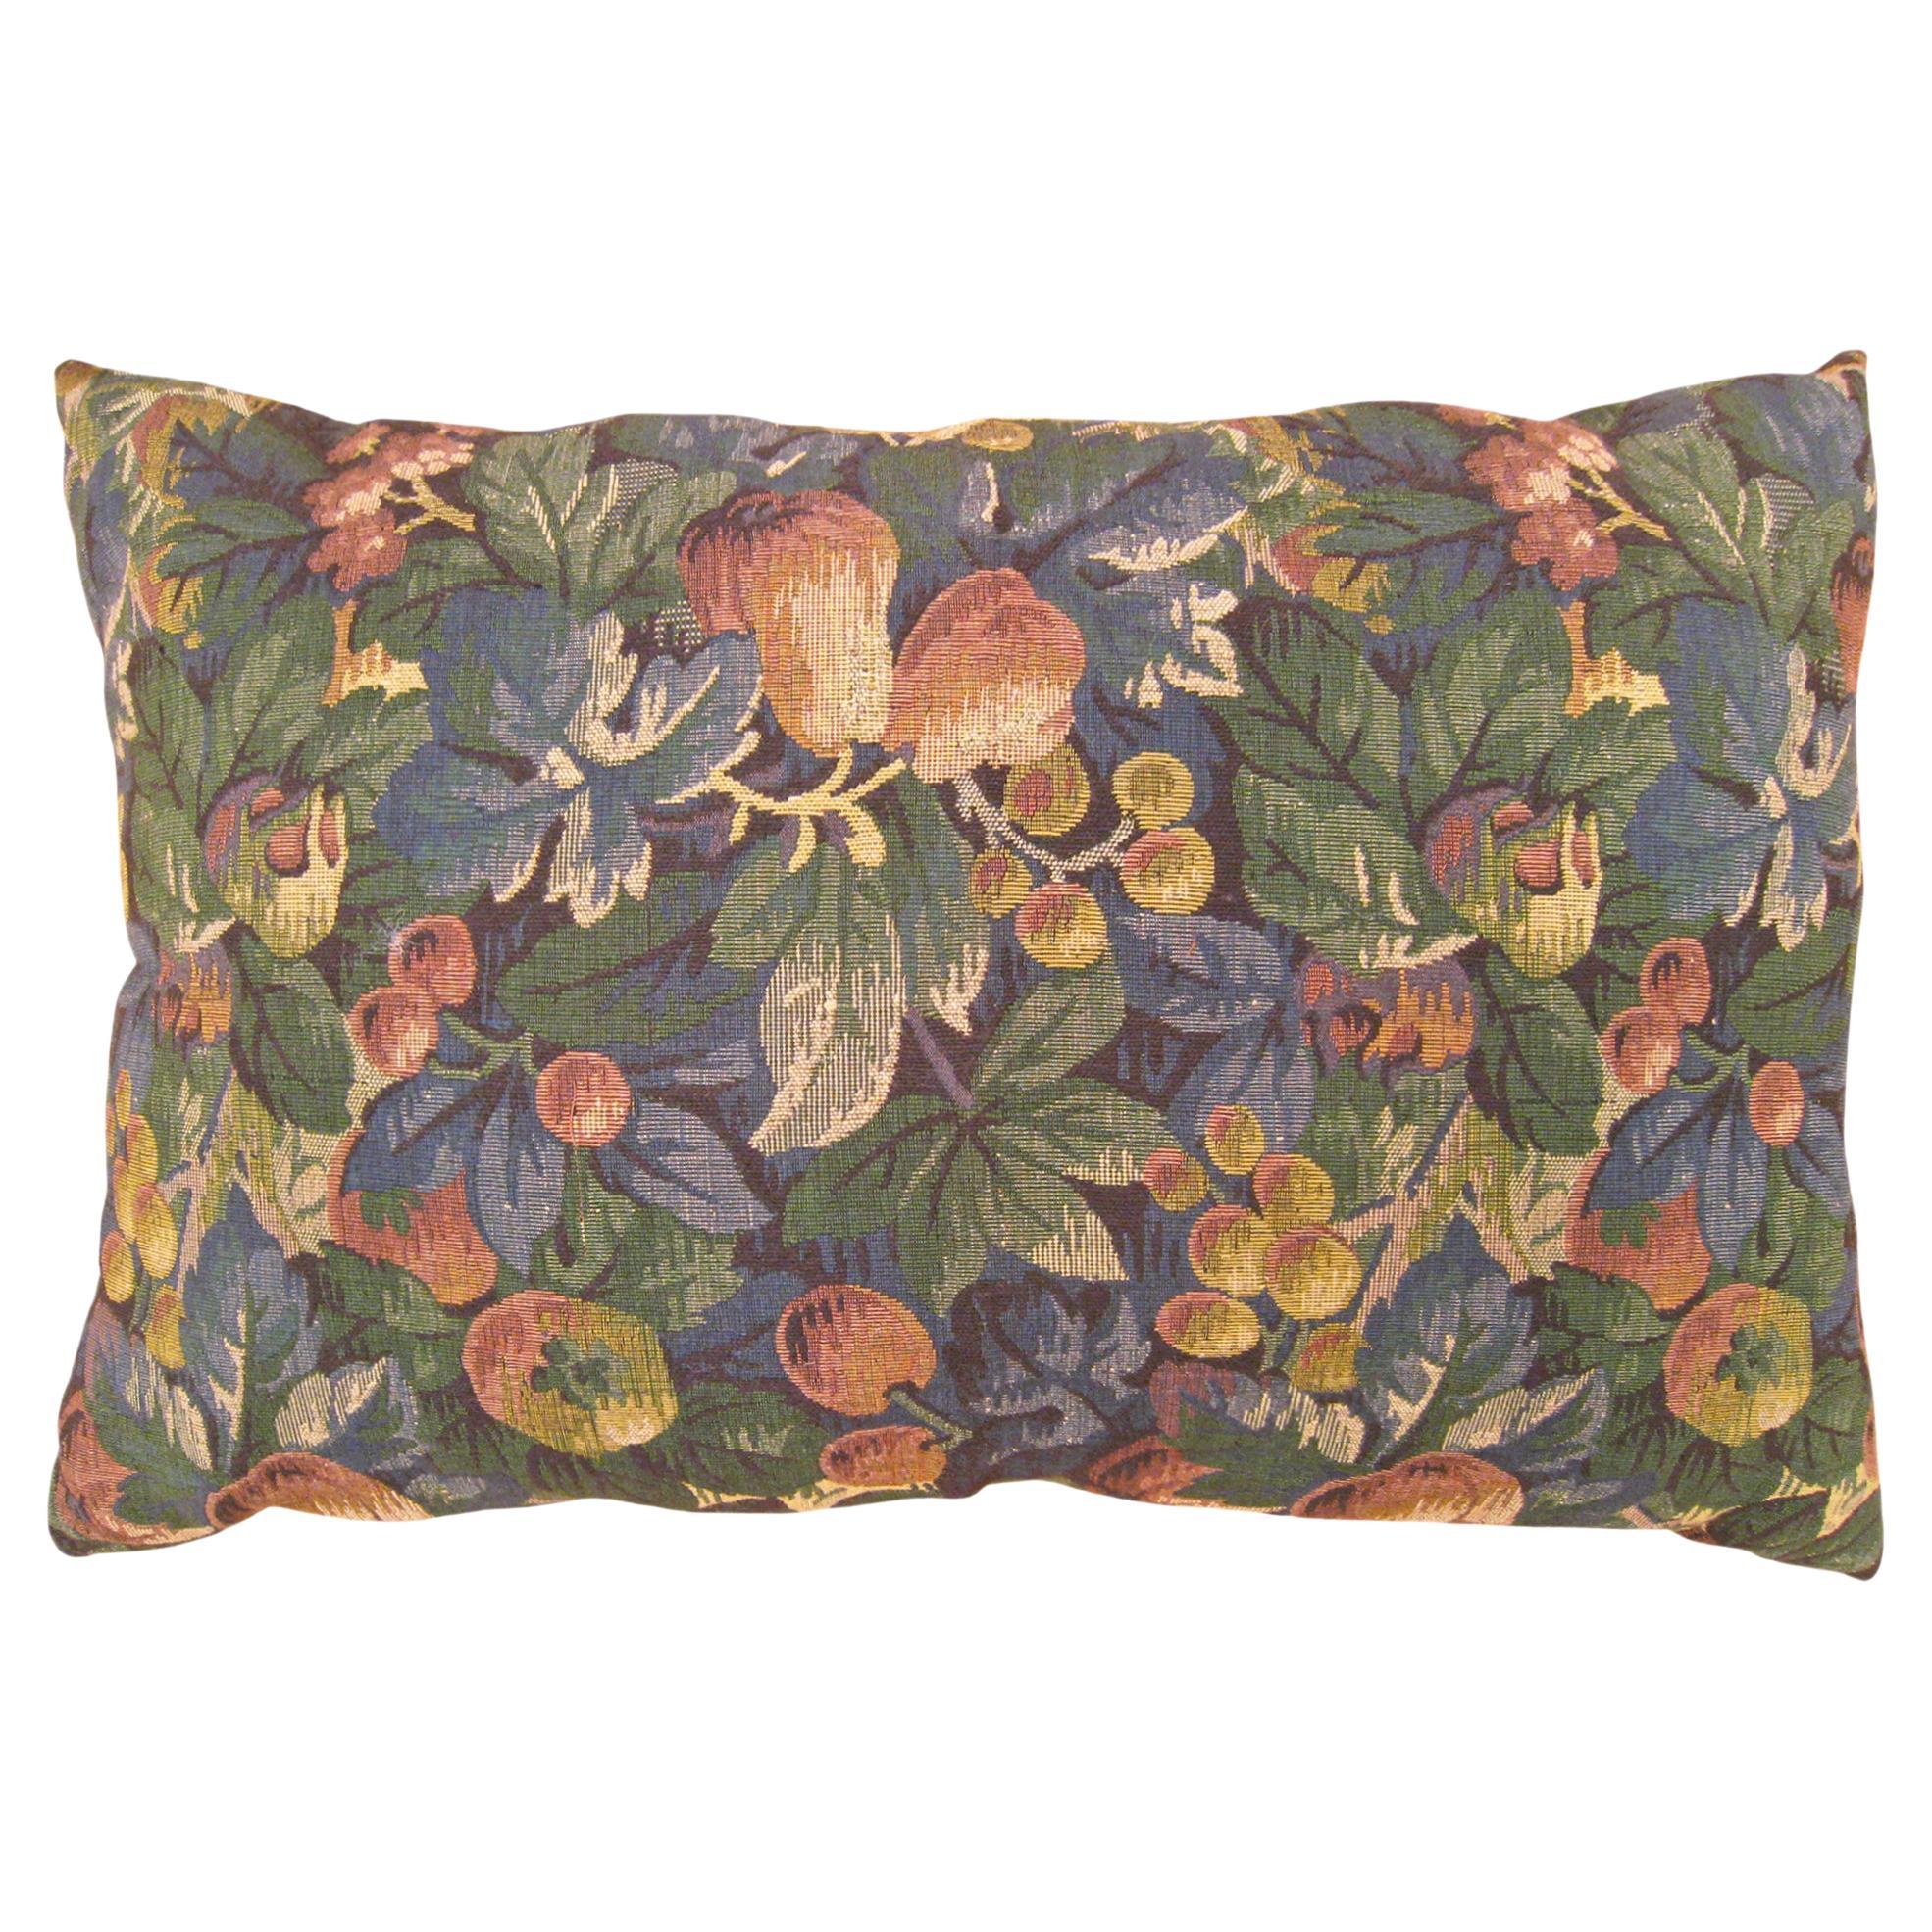 Decorative Antique Jacquard Tapestry Pillow with a Garden Design Allover